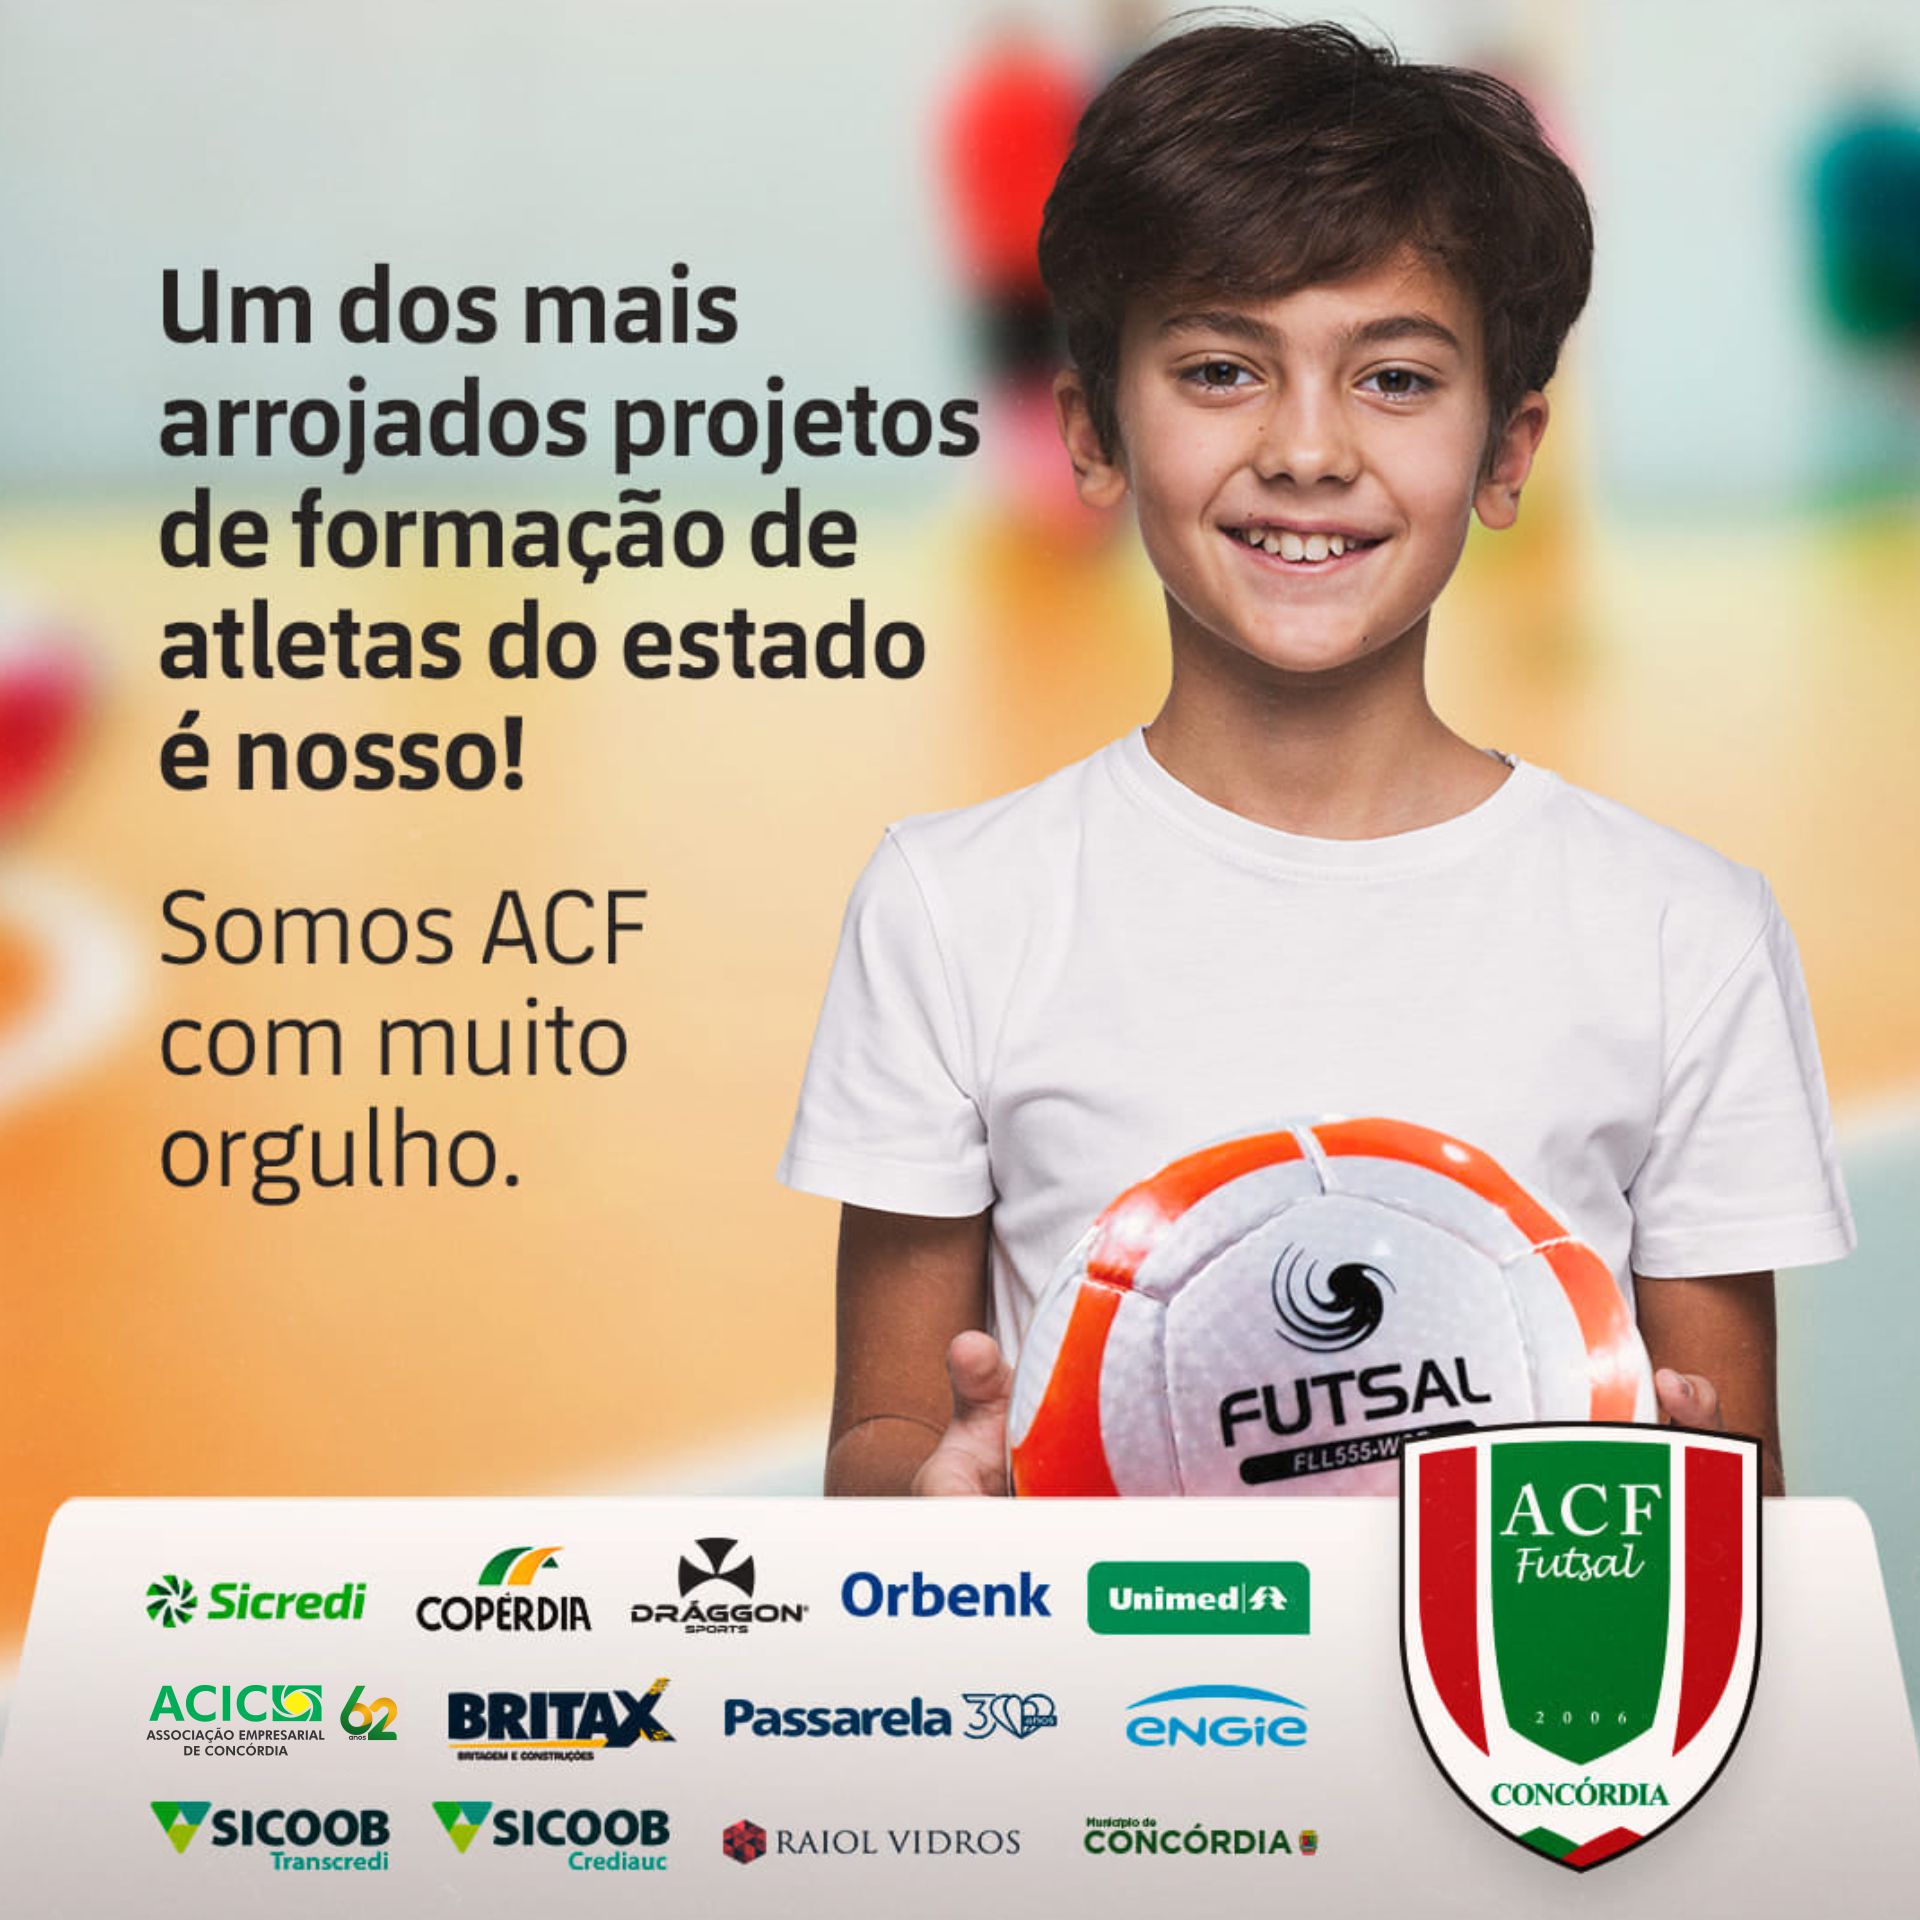 ACF - Concórdia  Futsal